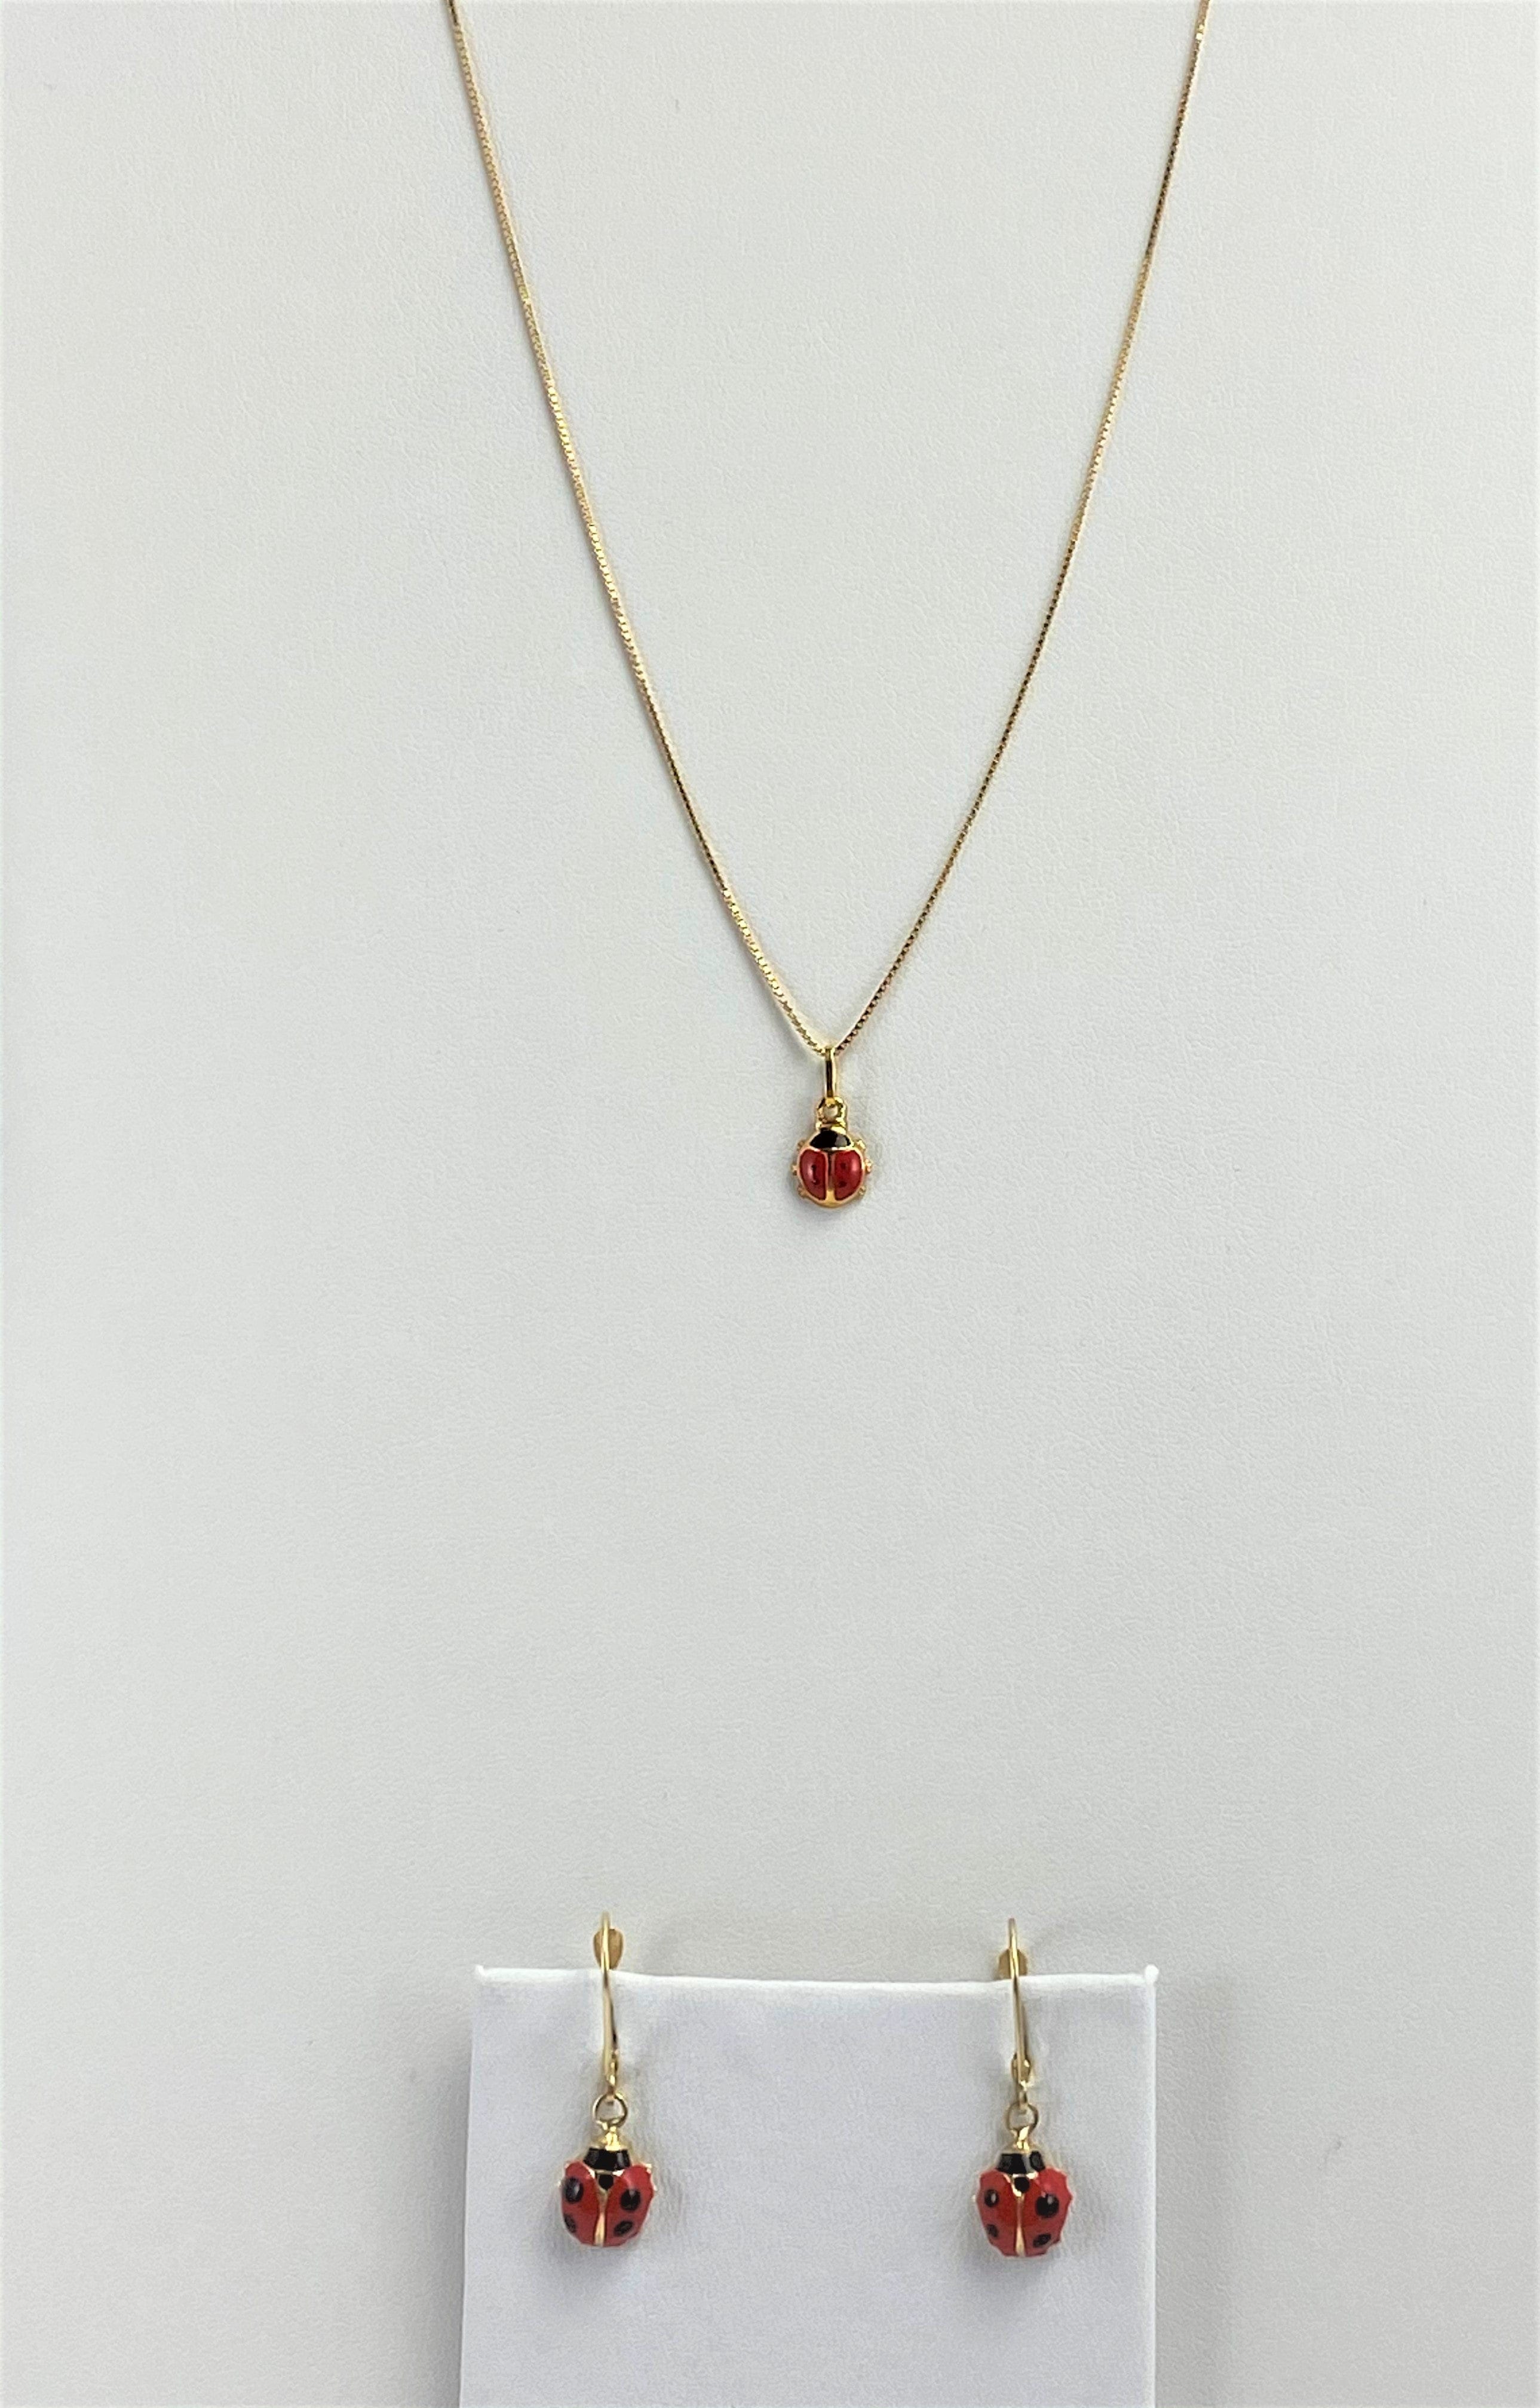 Ladybug Red Black Pendant, Sterling Silver Gold Plated Faberge Egg Necklace  | eBay